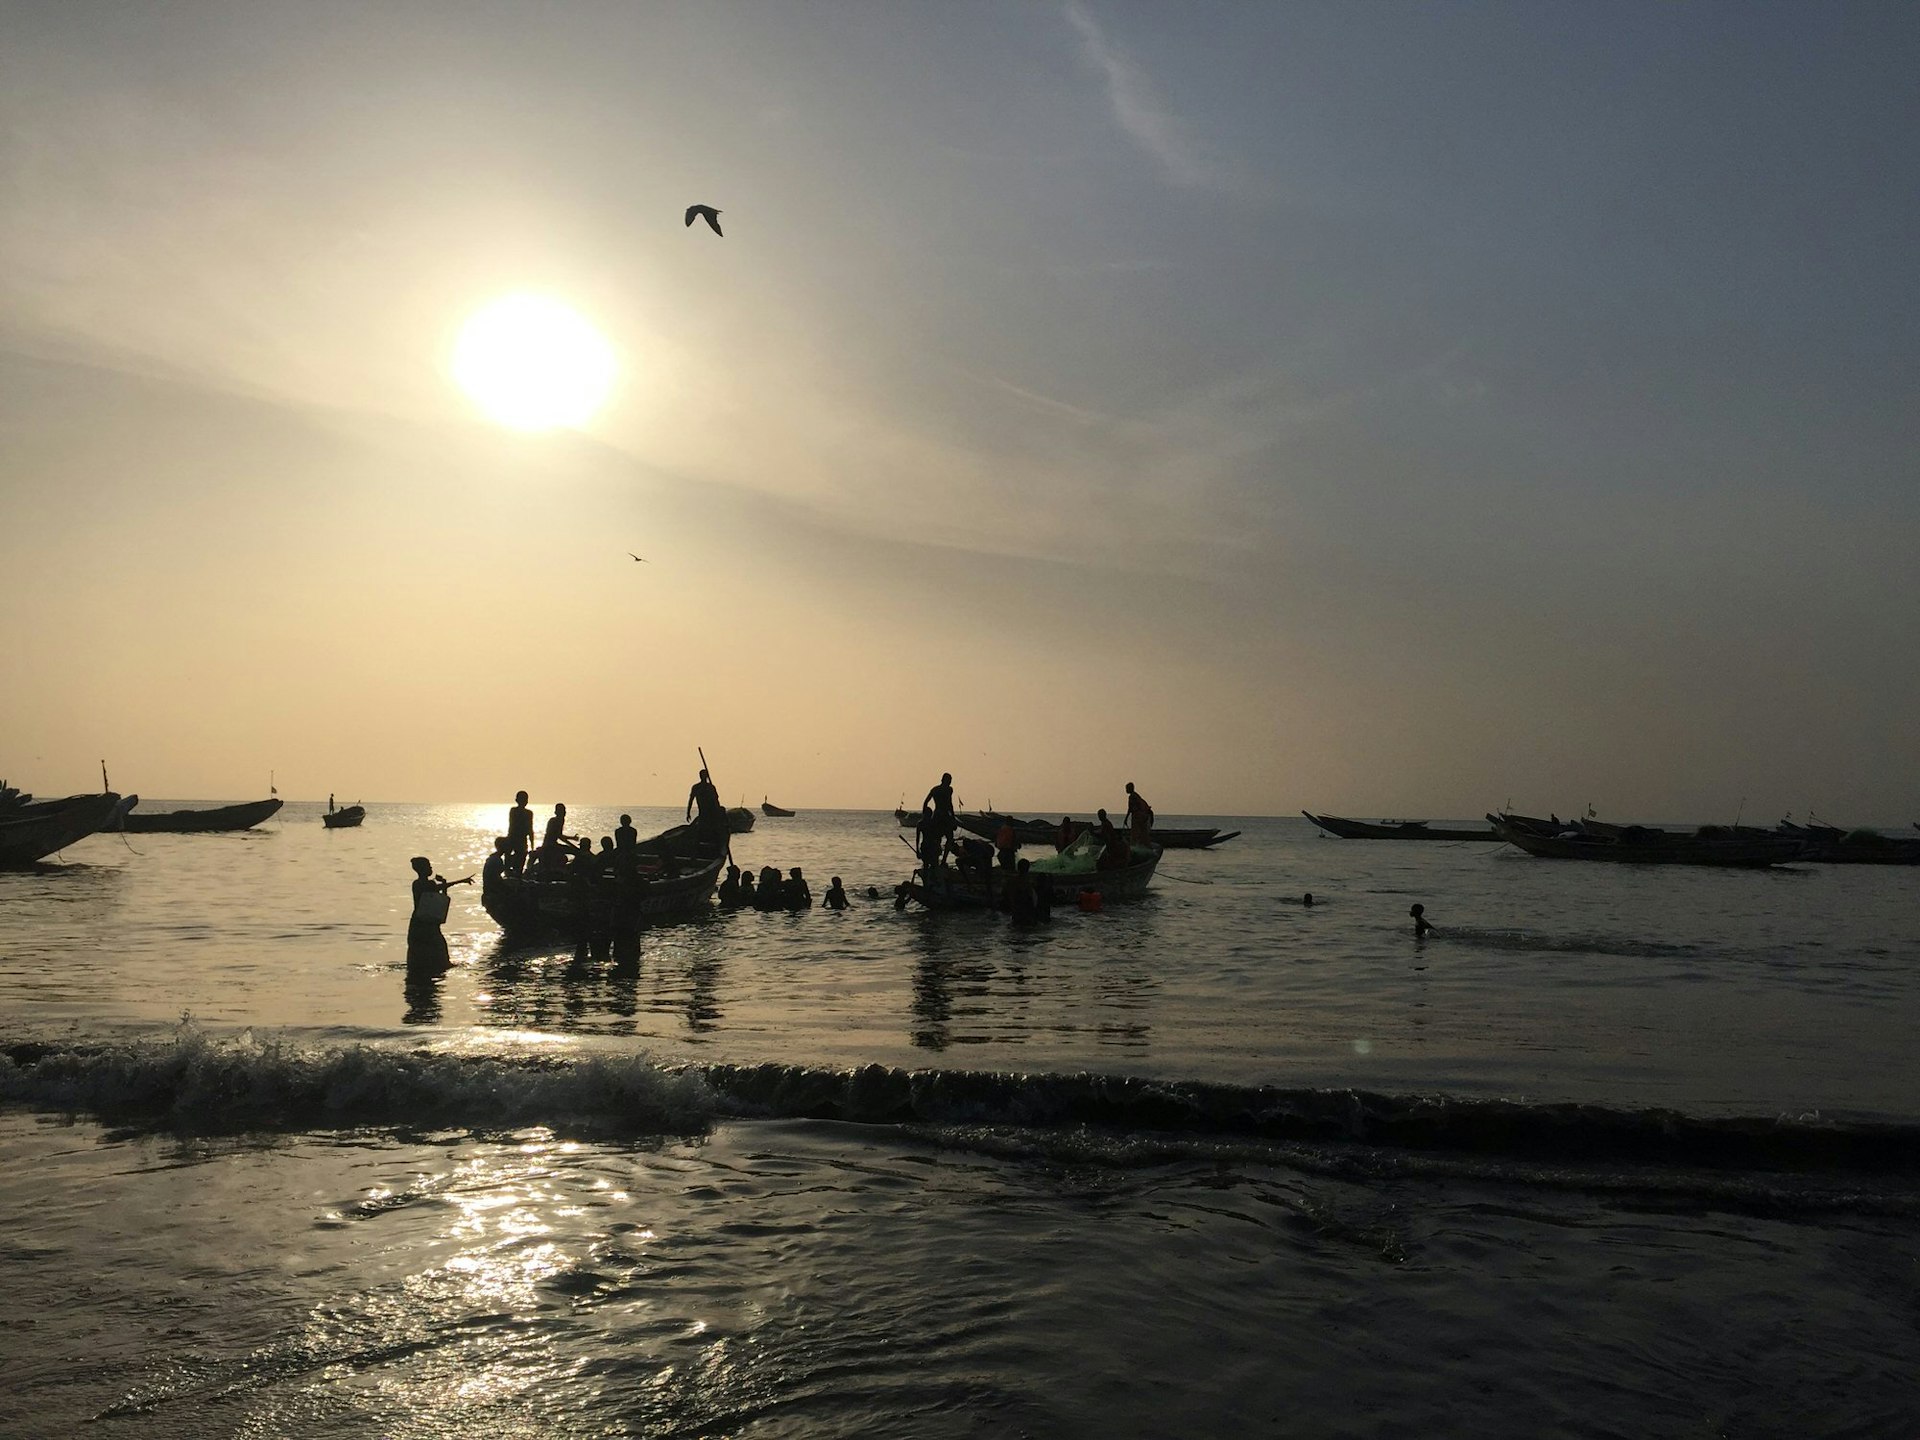 Tanji's fishing market, The Gambia